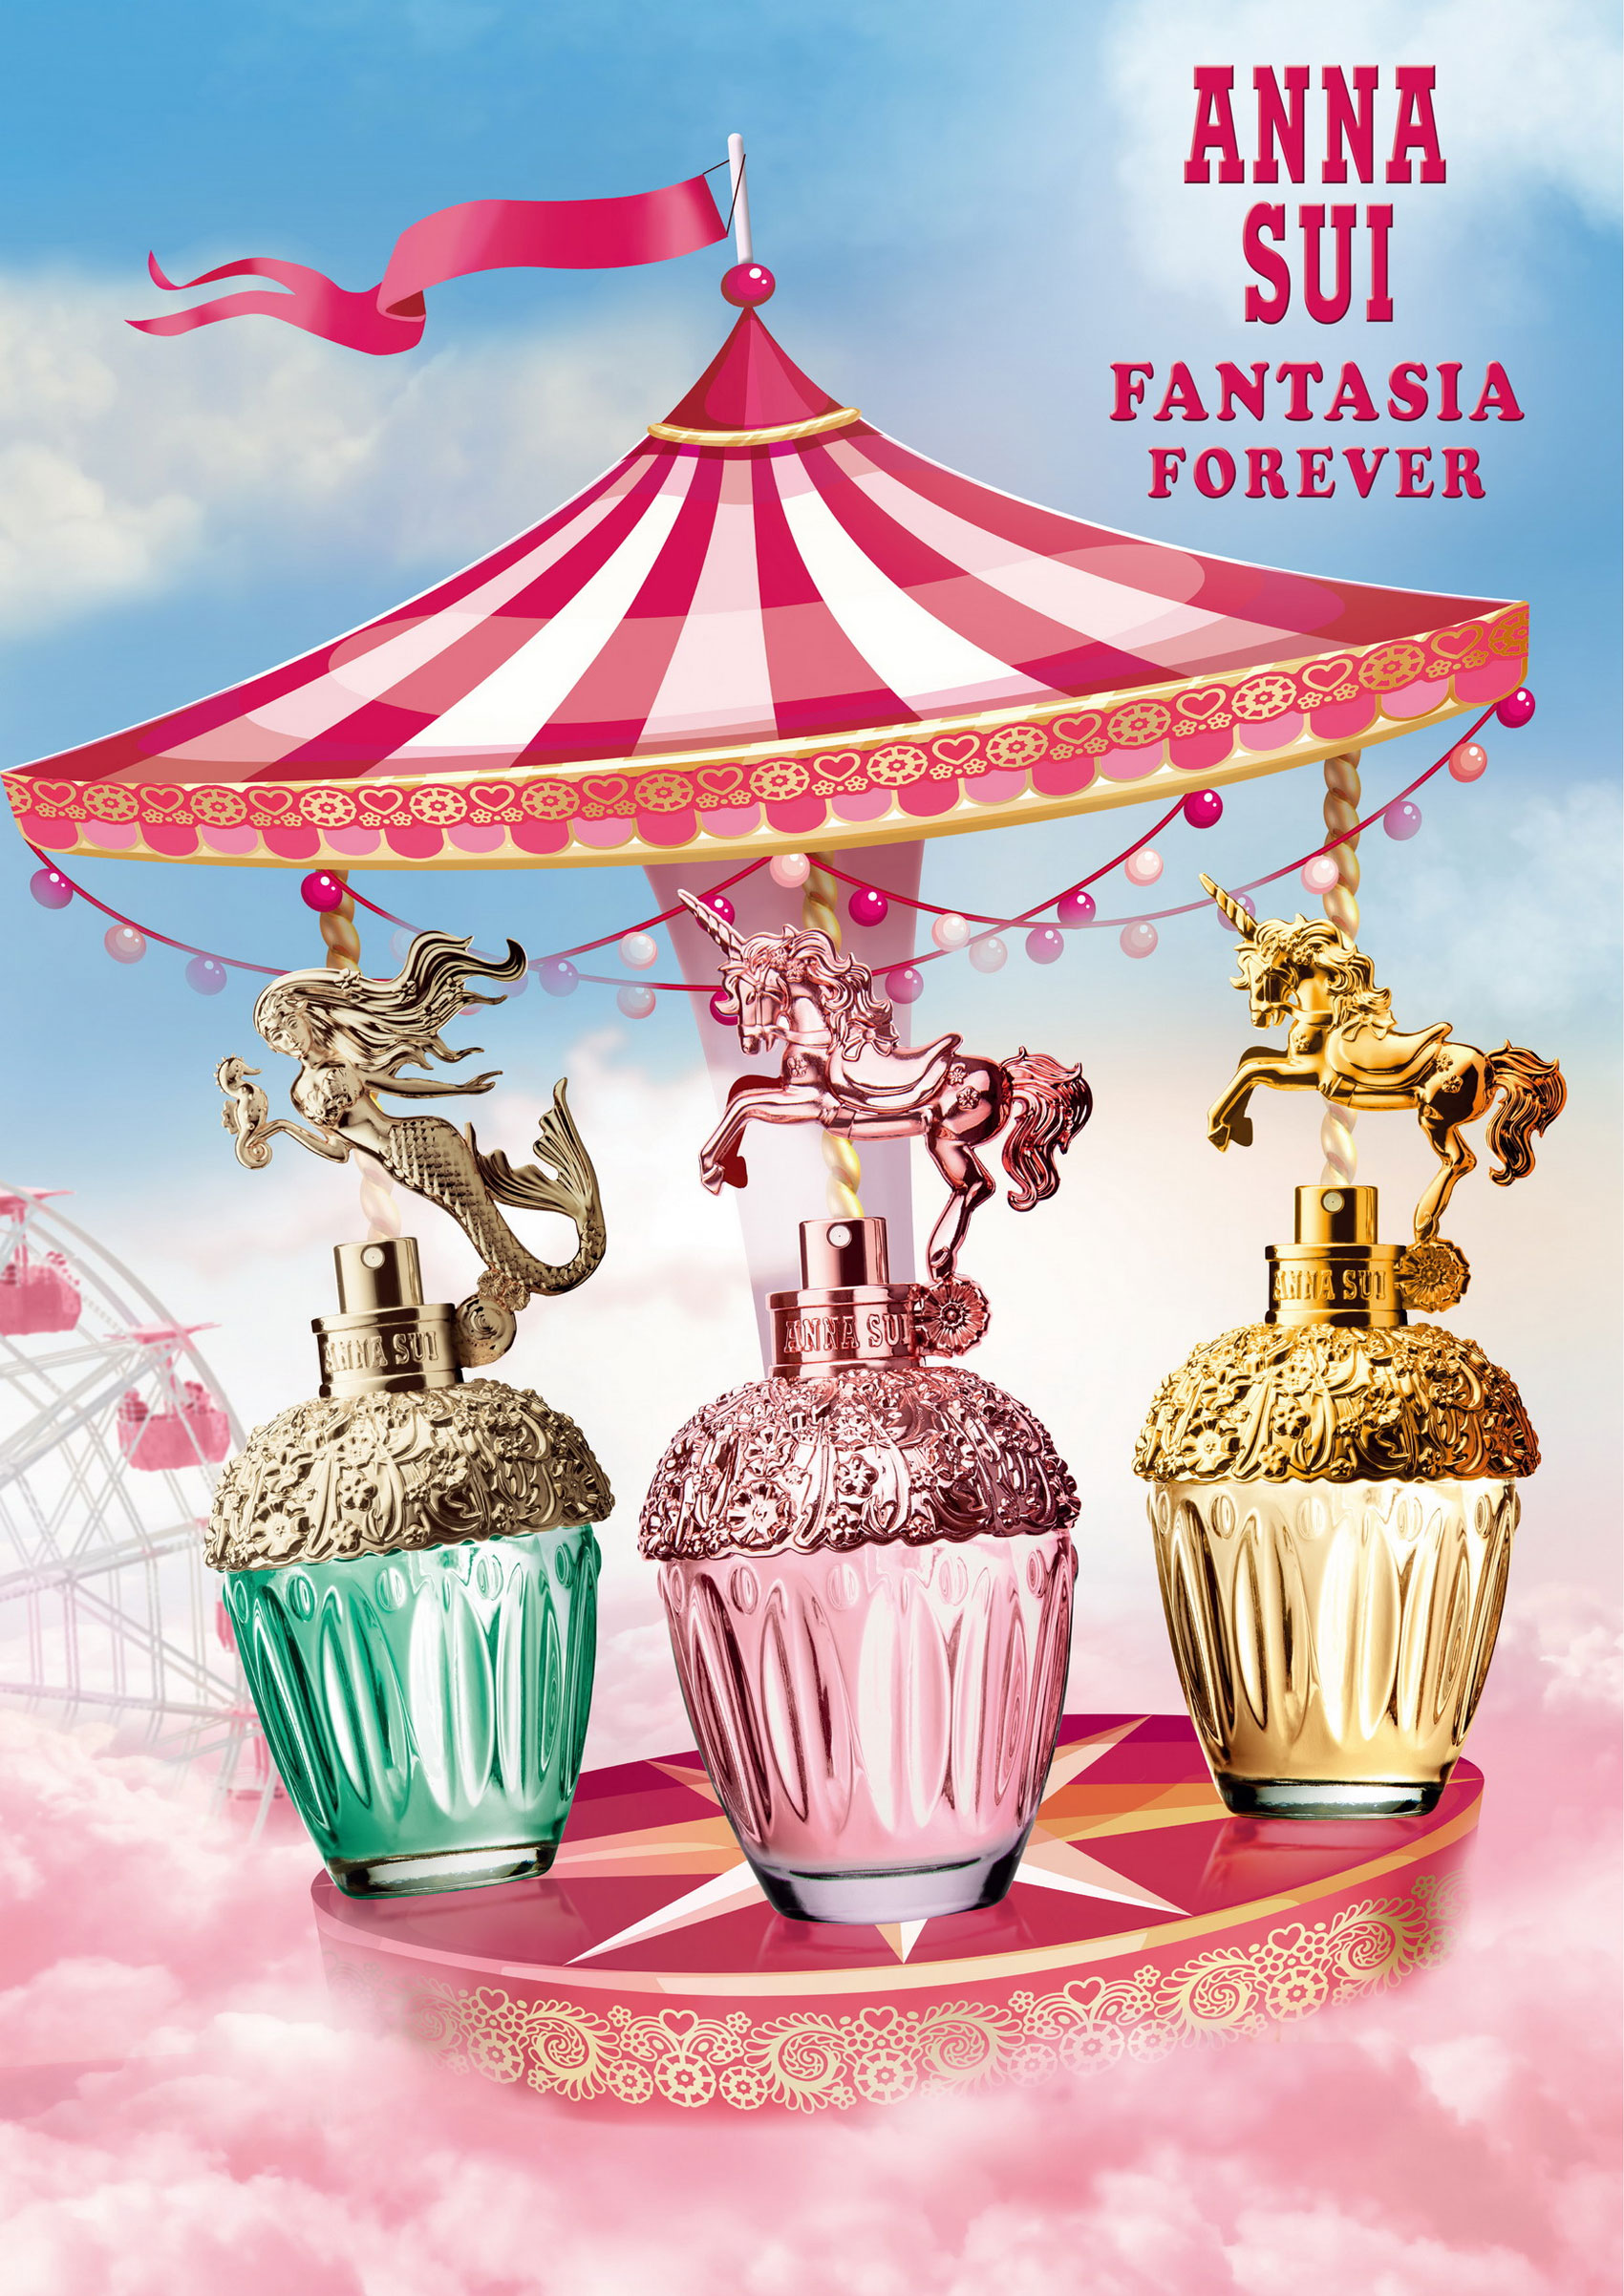 Anna Sui Fantasia Forever Fragrance Ad